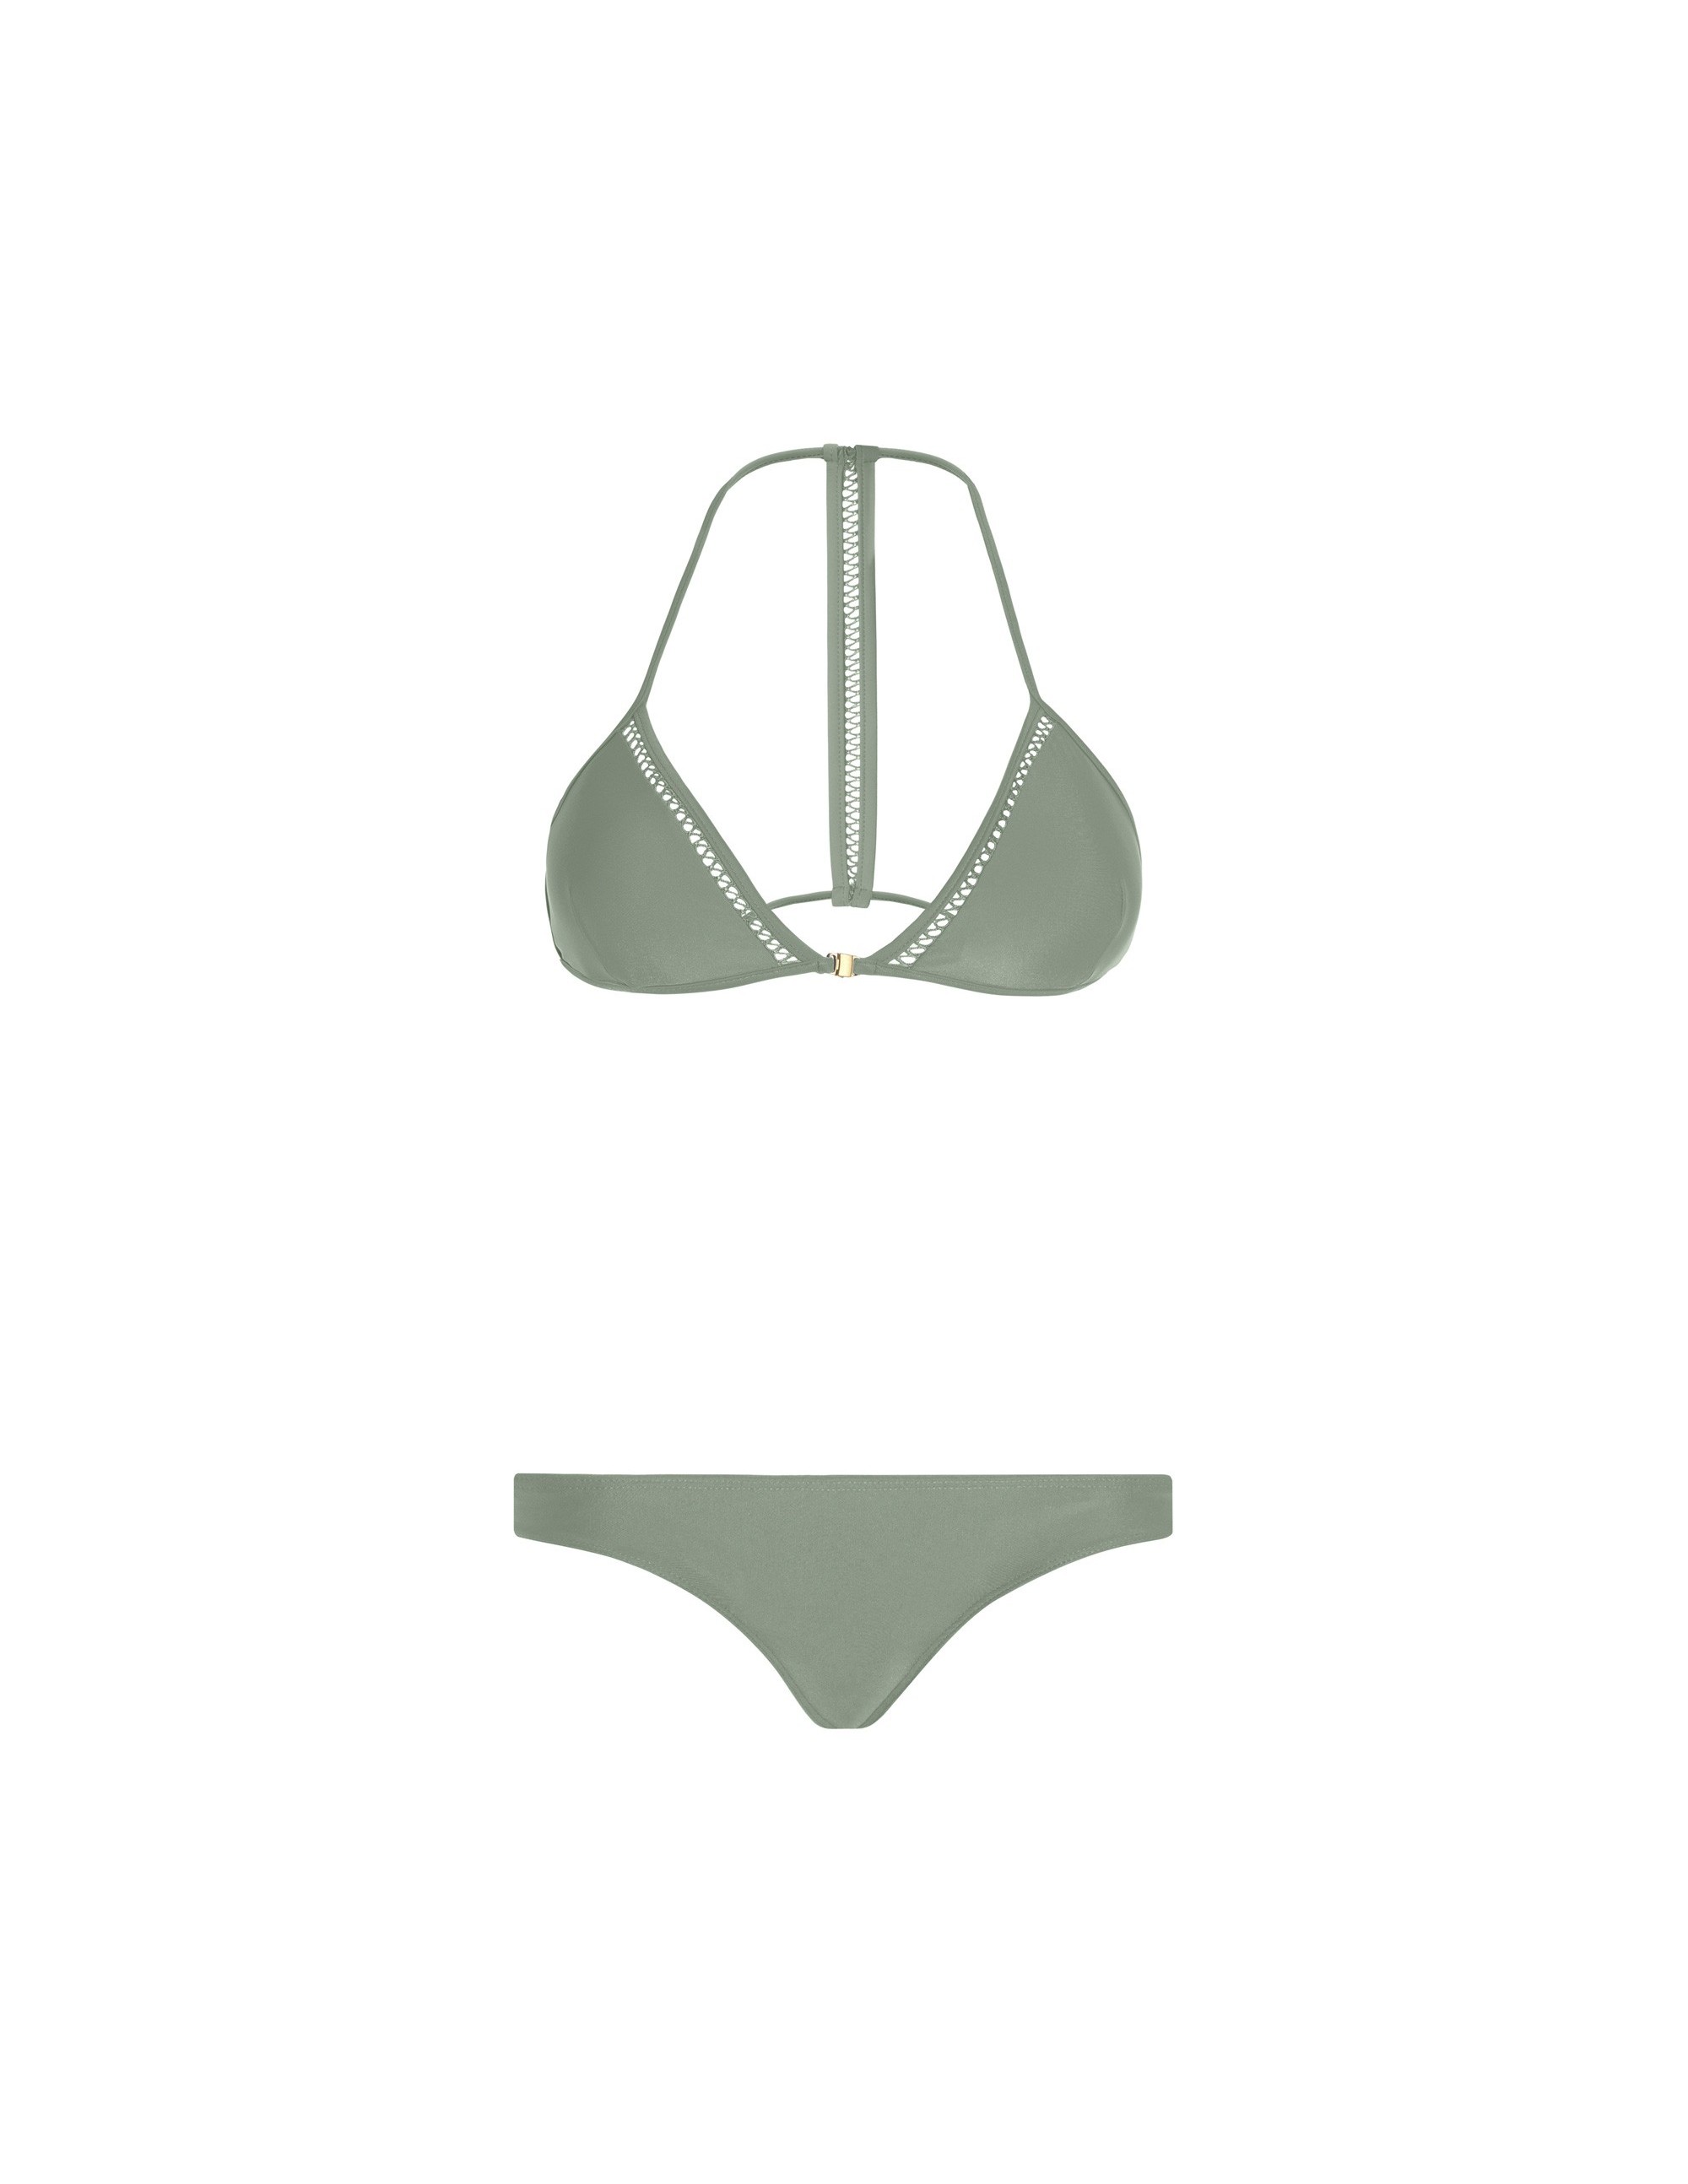 PARAISO bikini bottom - SERENGETI